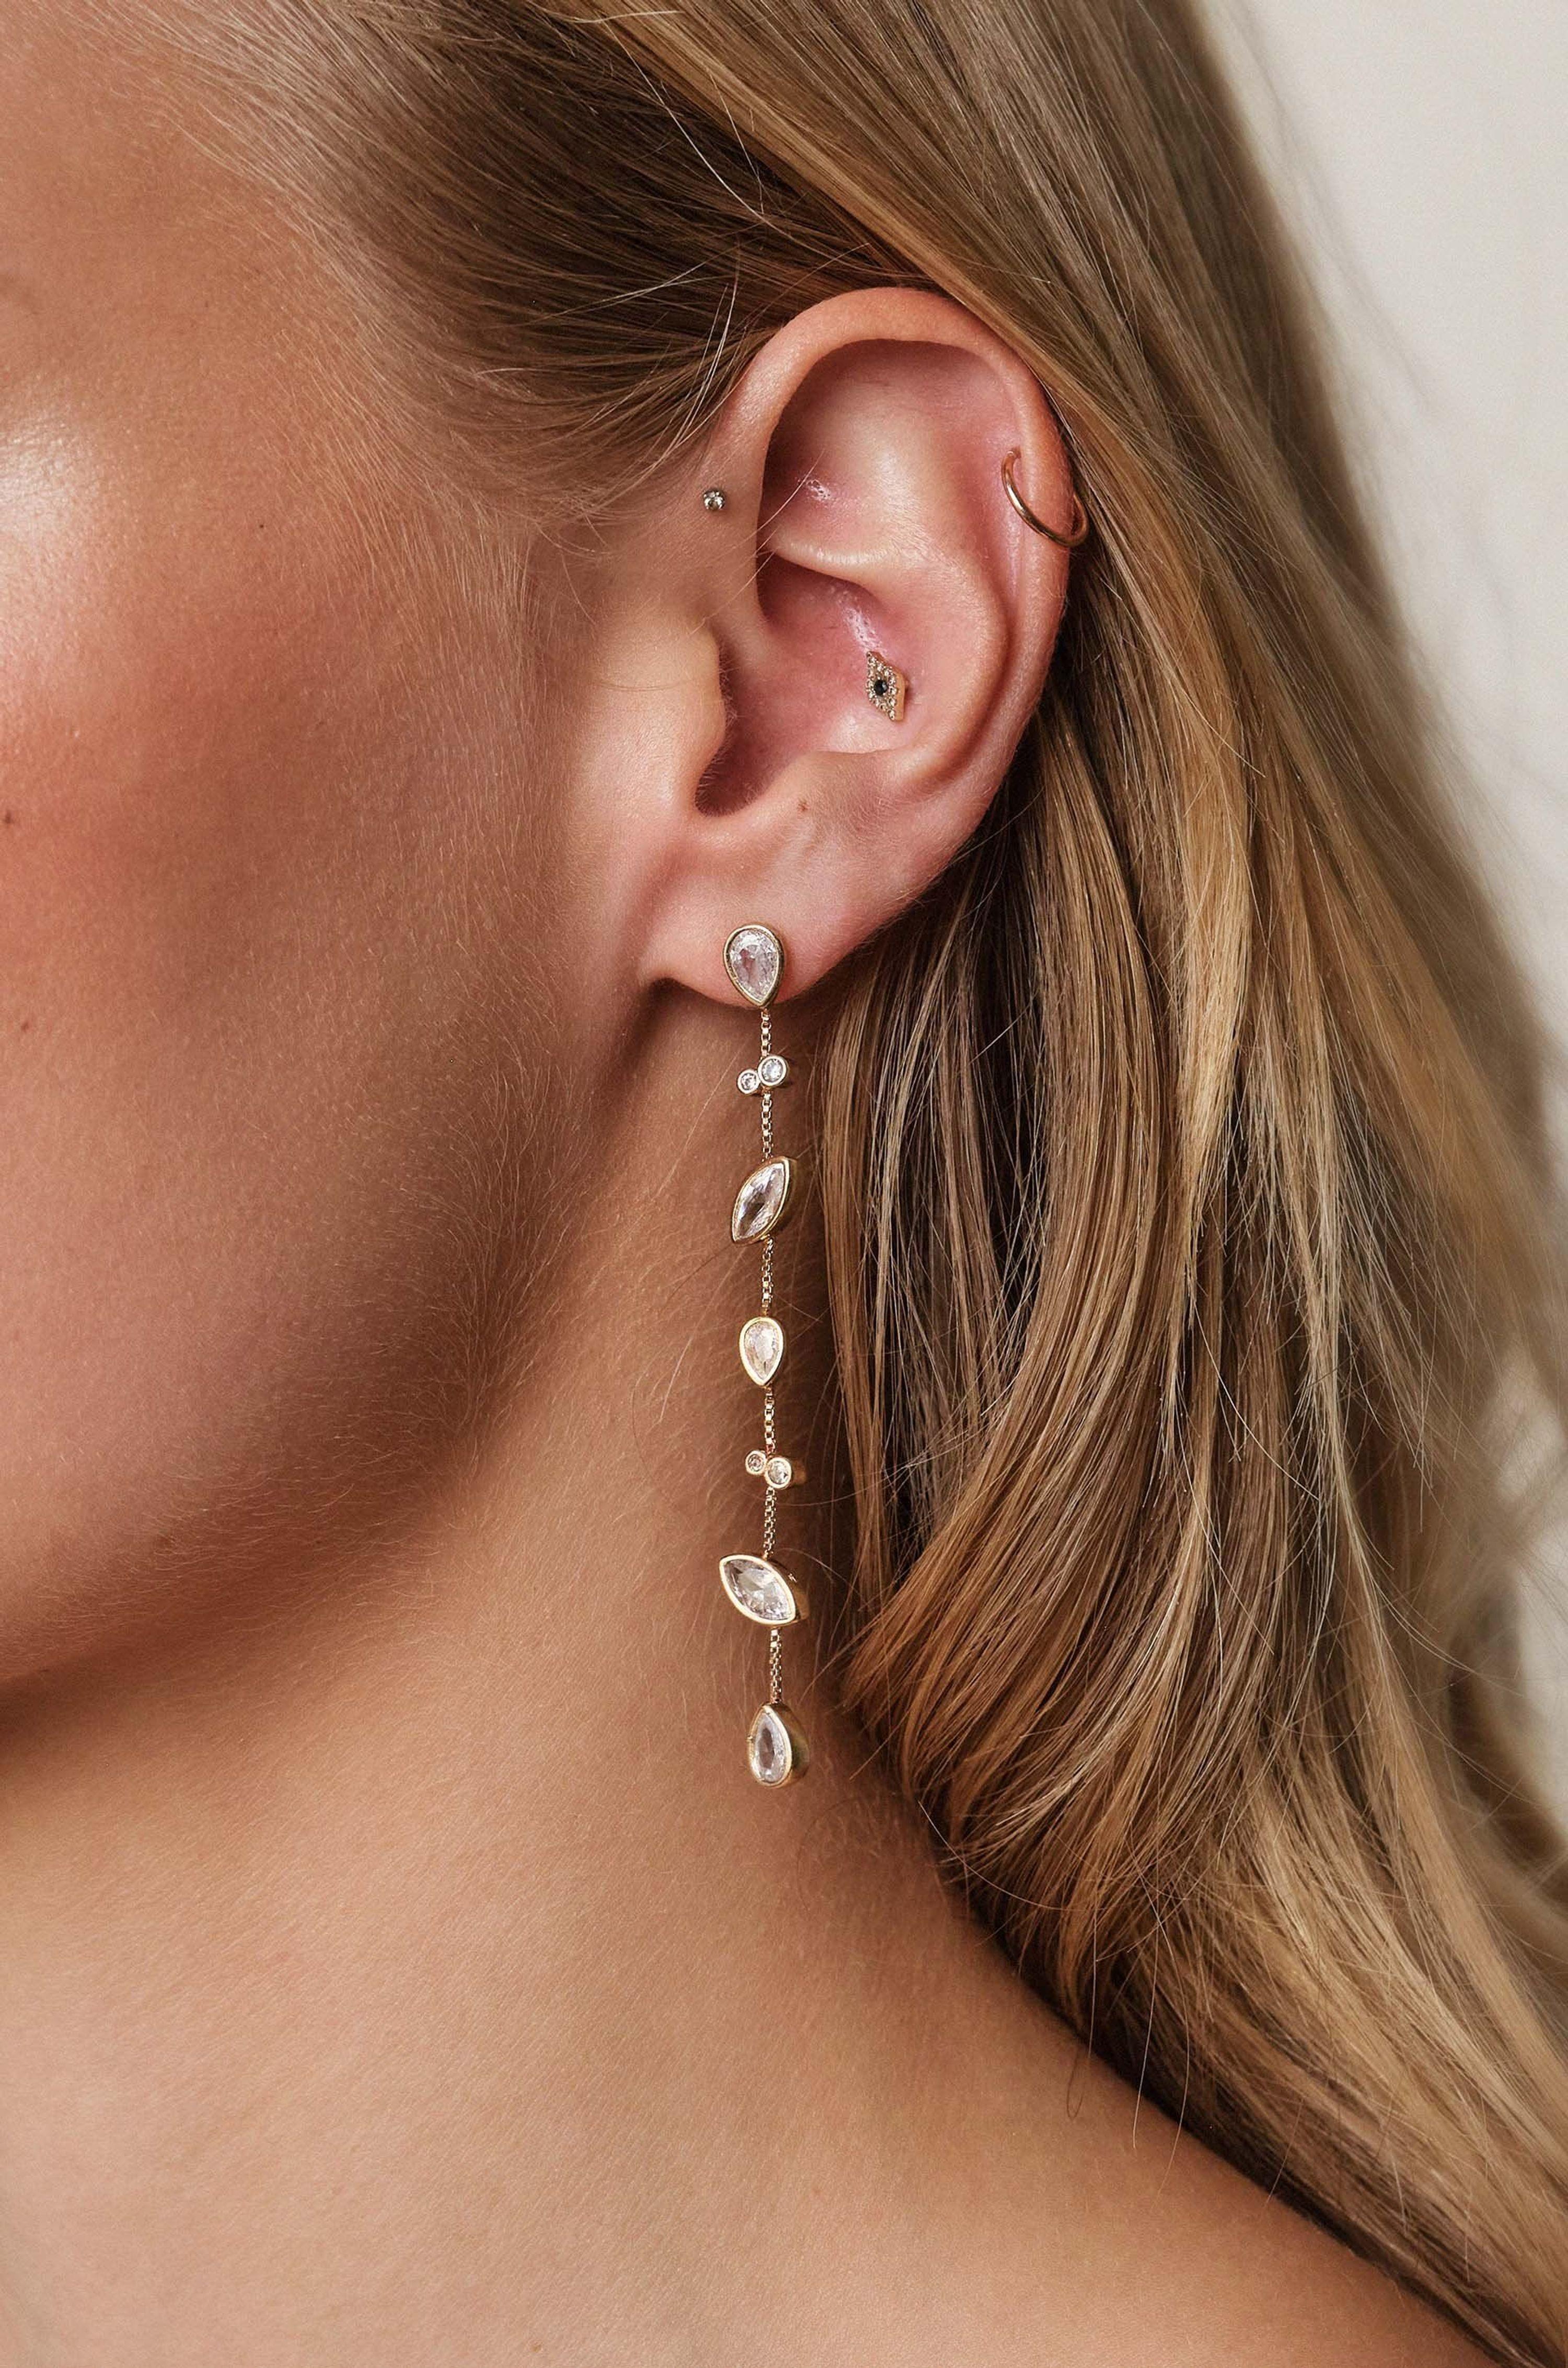 Crystal Drop Earrings | Large Clear Crystal Earrings | Gold and Crystal Earrings in 18K Gold Plated